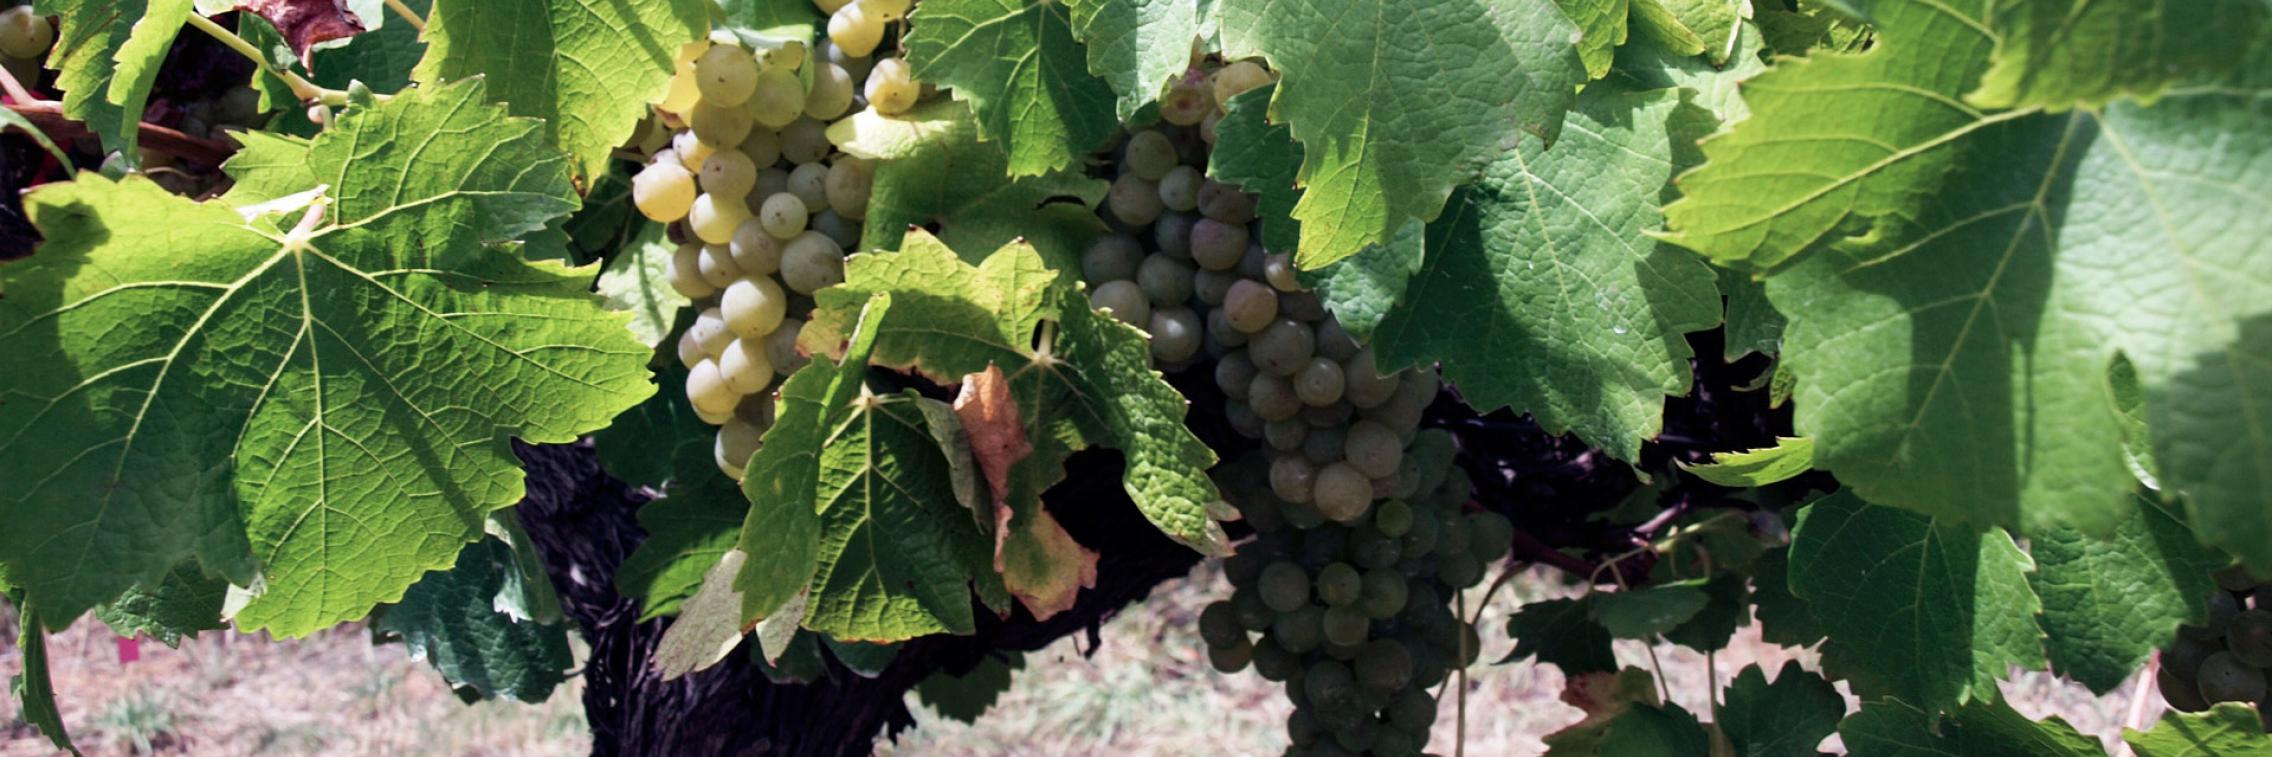 grapevine image